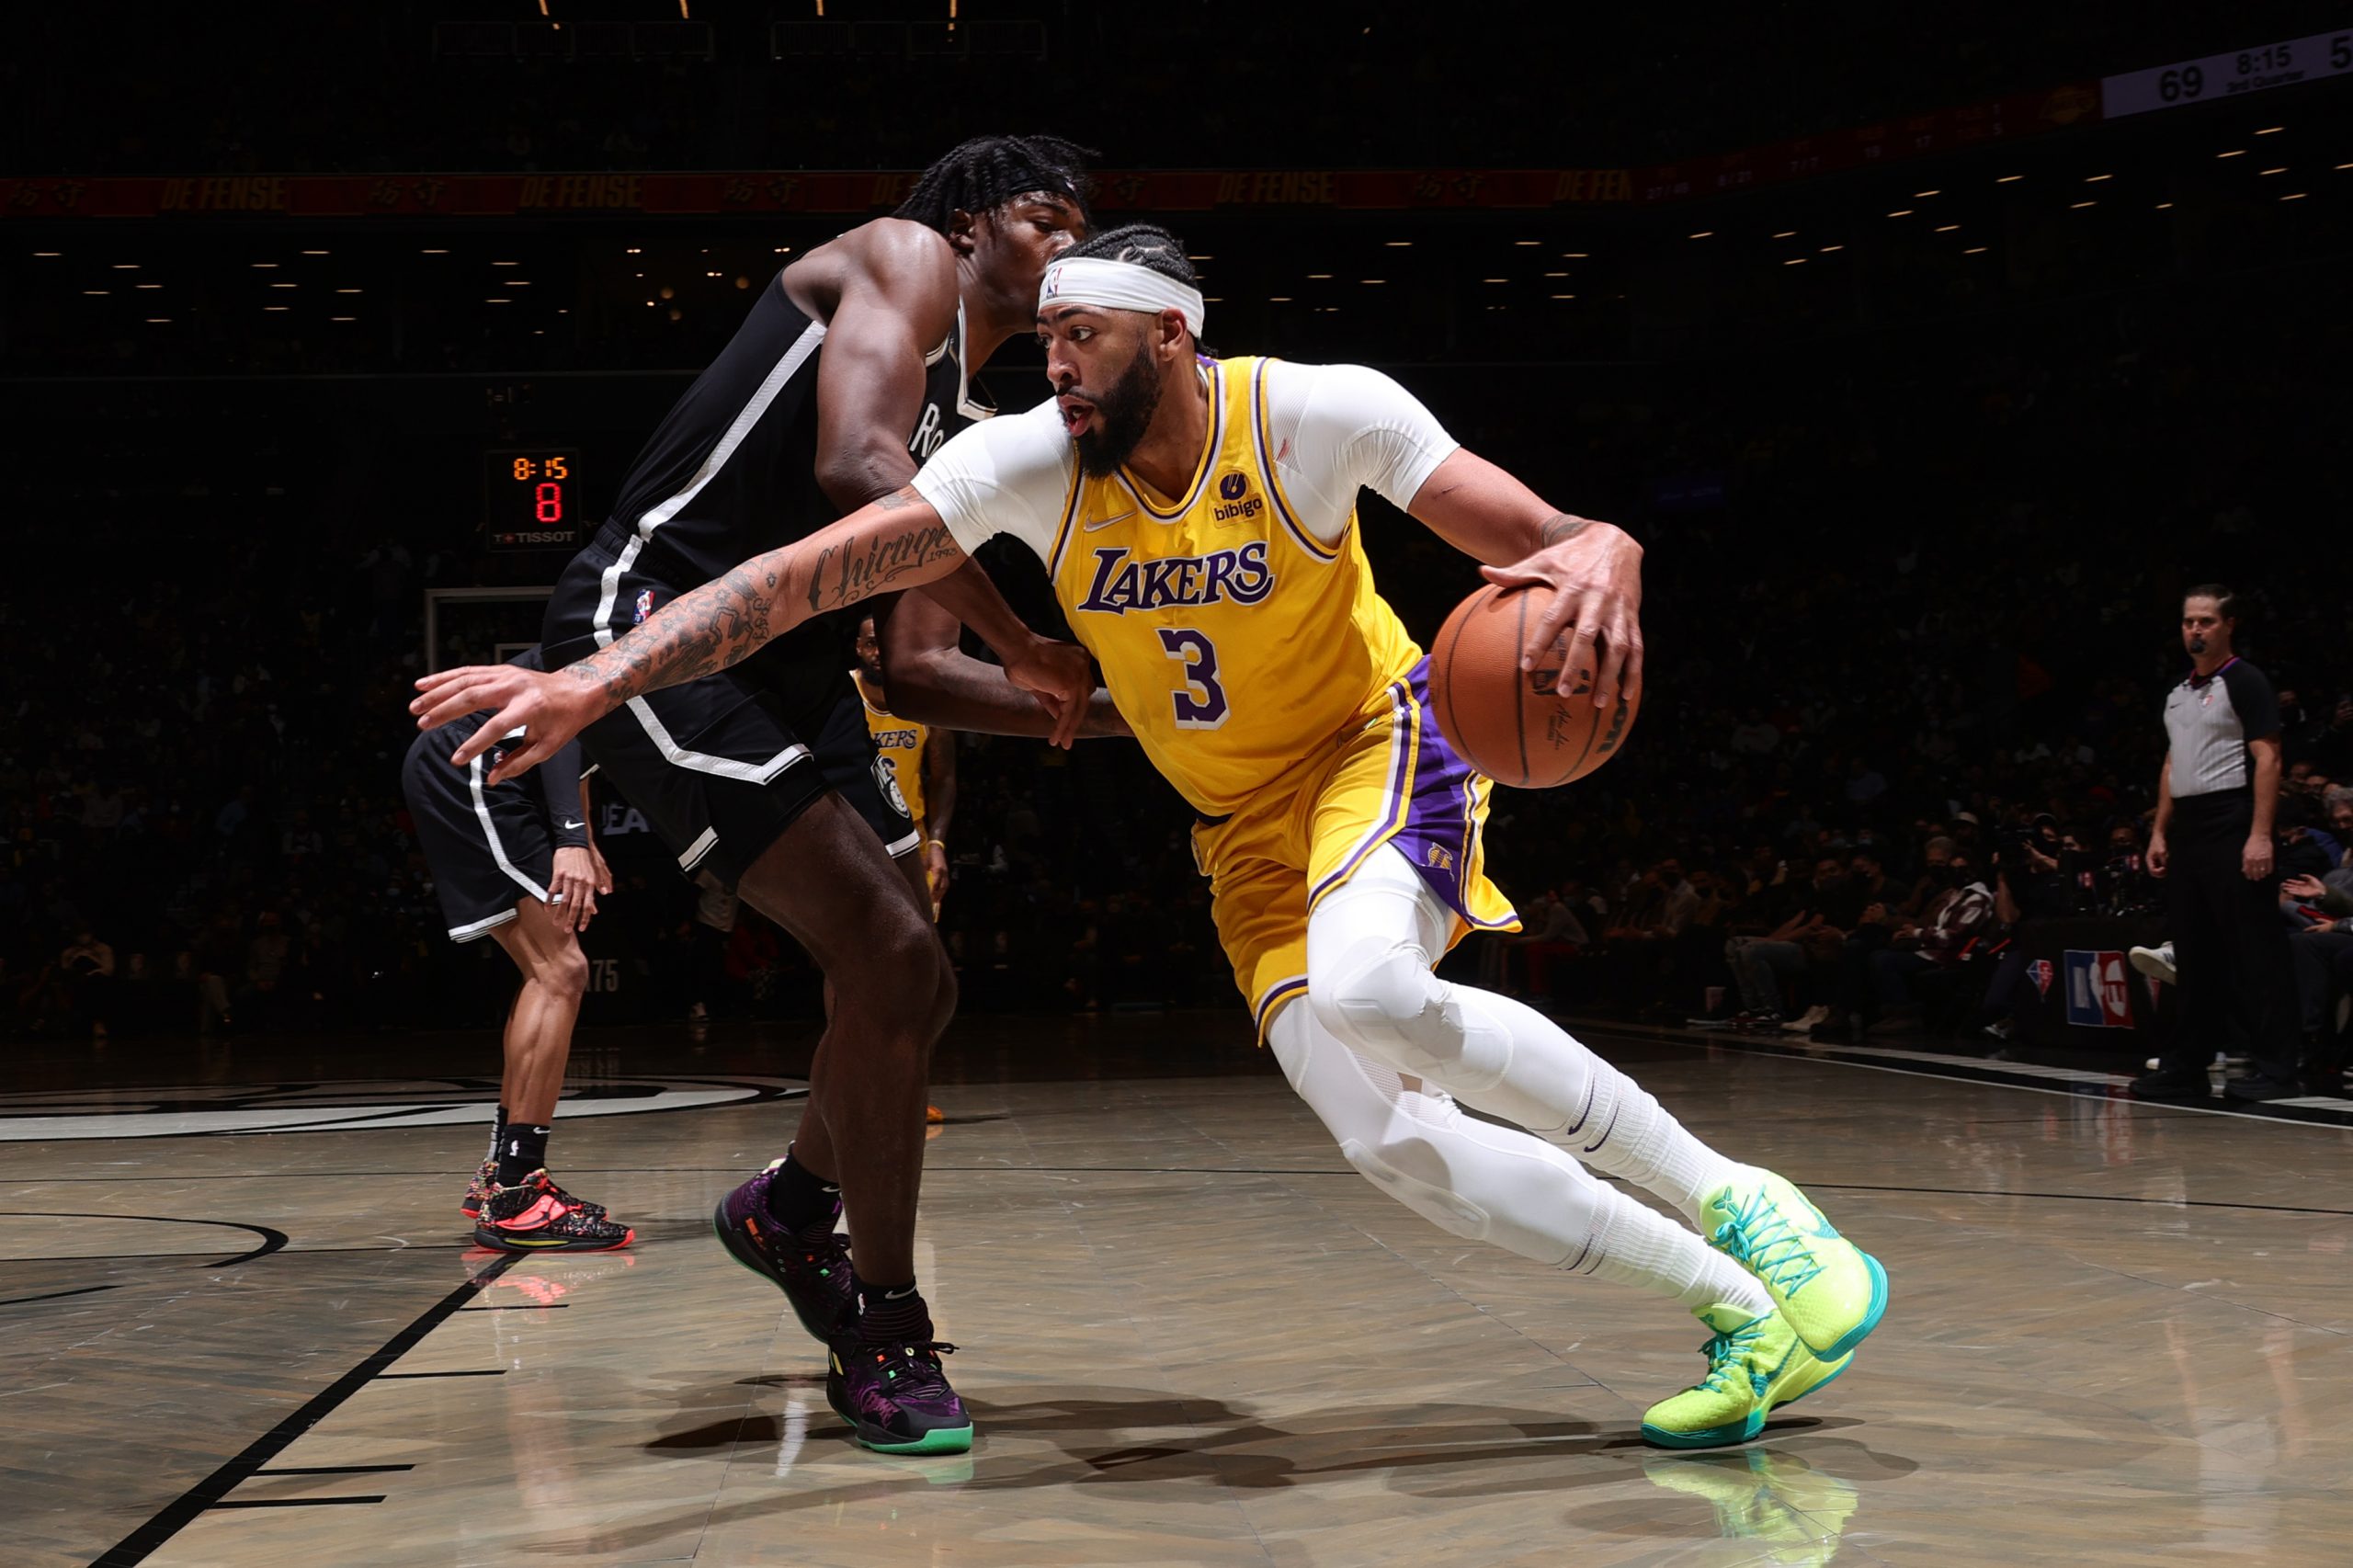 Final net. Энтони Дэвис Бруклин. Энтони Девис чемионство. Anthony Davis Lakers. Лос-Анджелес Лейкерс Финикс Санз 8 апреля.